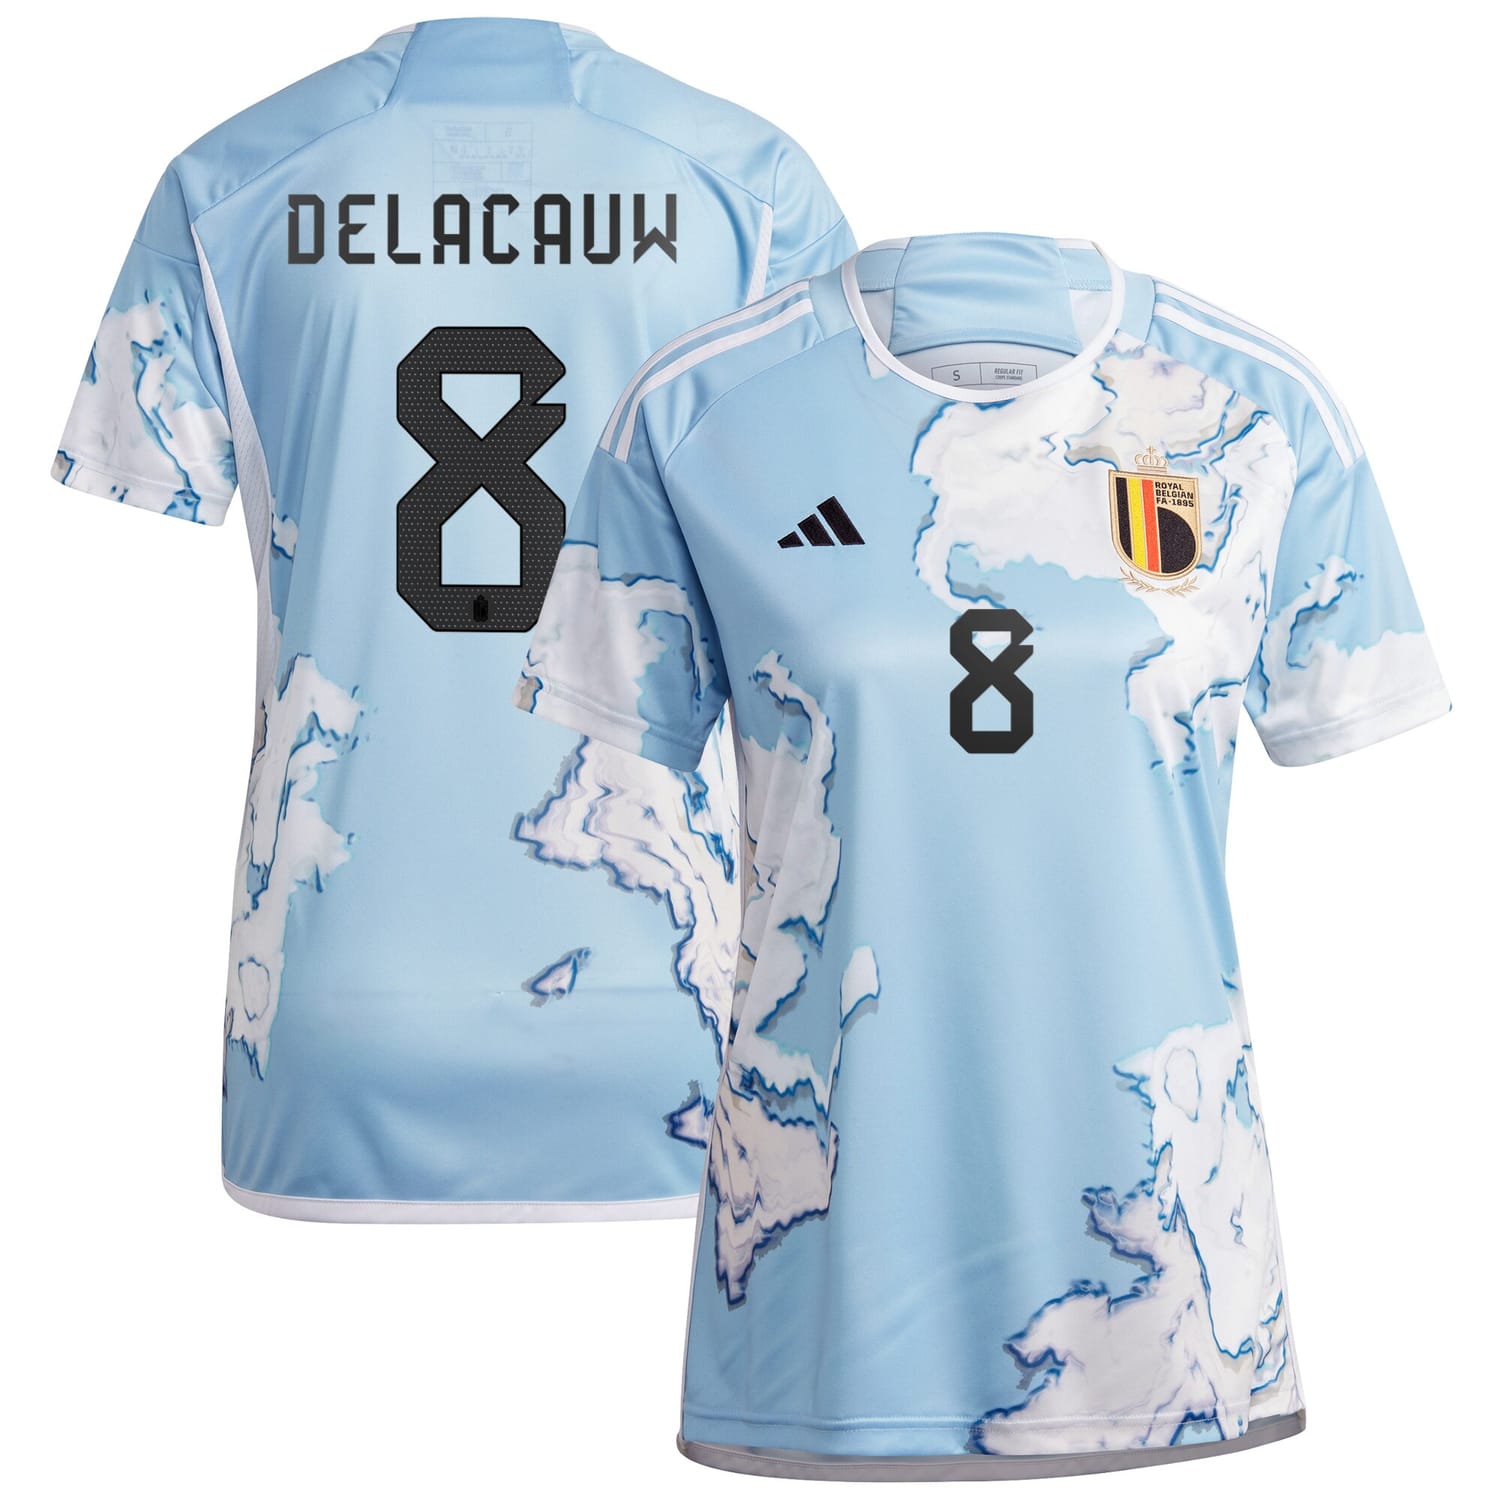 Belgium National Team Away Jersey Shirt 2023 player Féli Delacauw 8 printing for Women